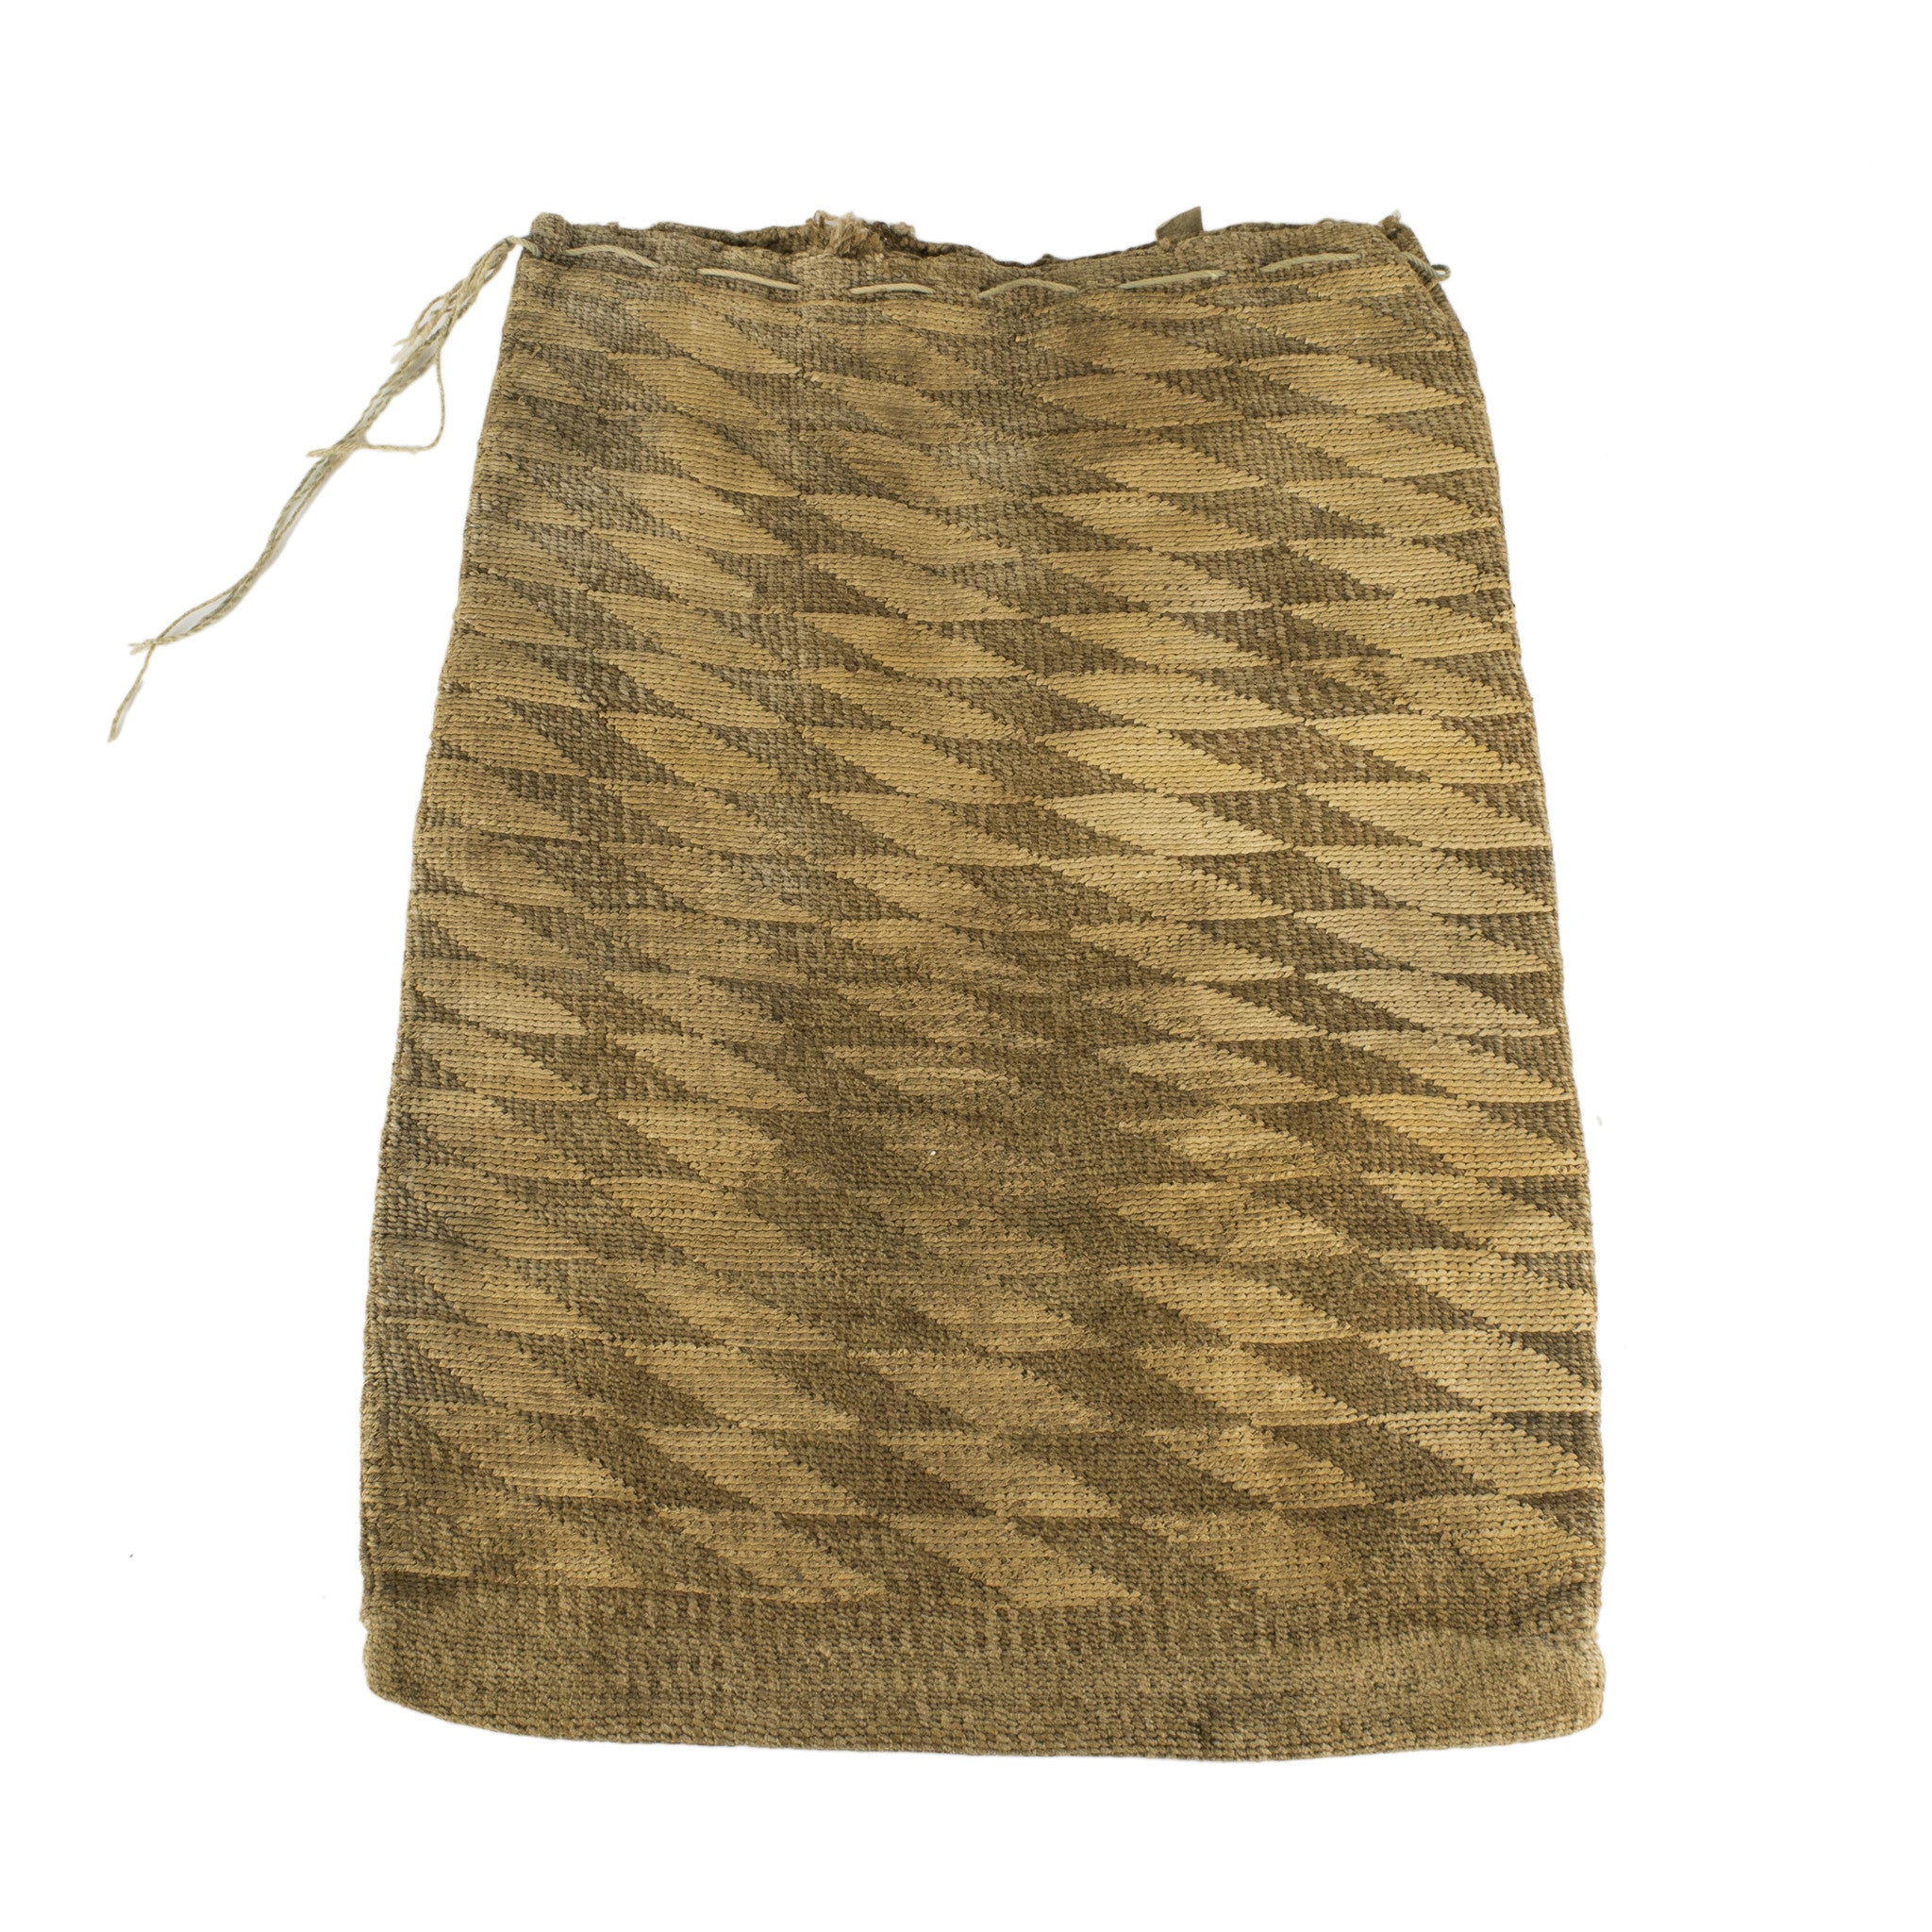 Utilitarian Corn Husk Bag, Native, Basketry, Corn Husk